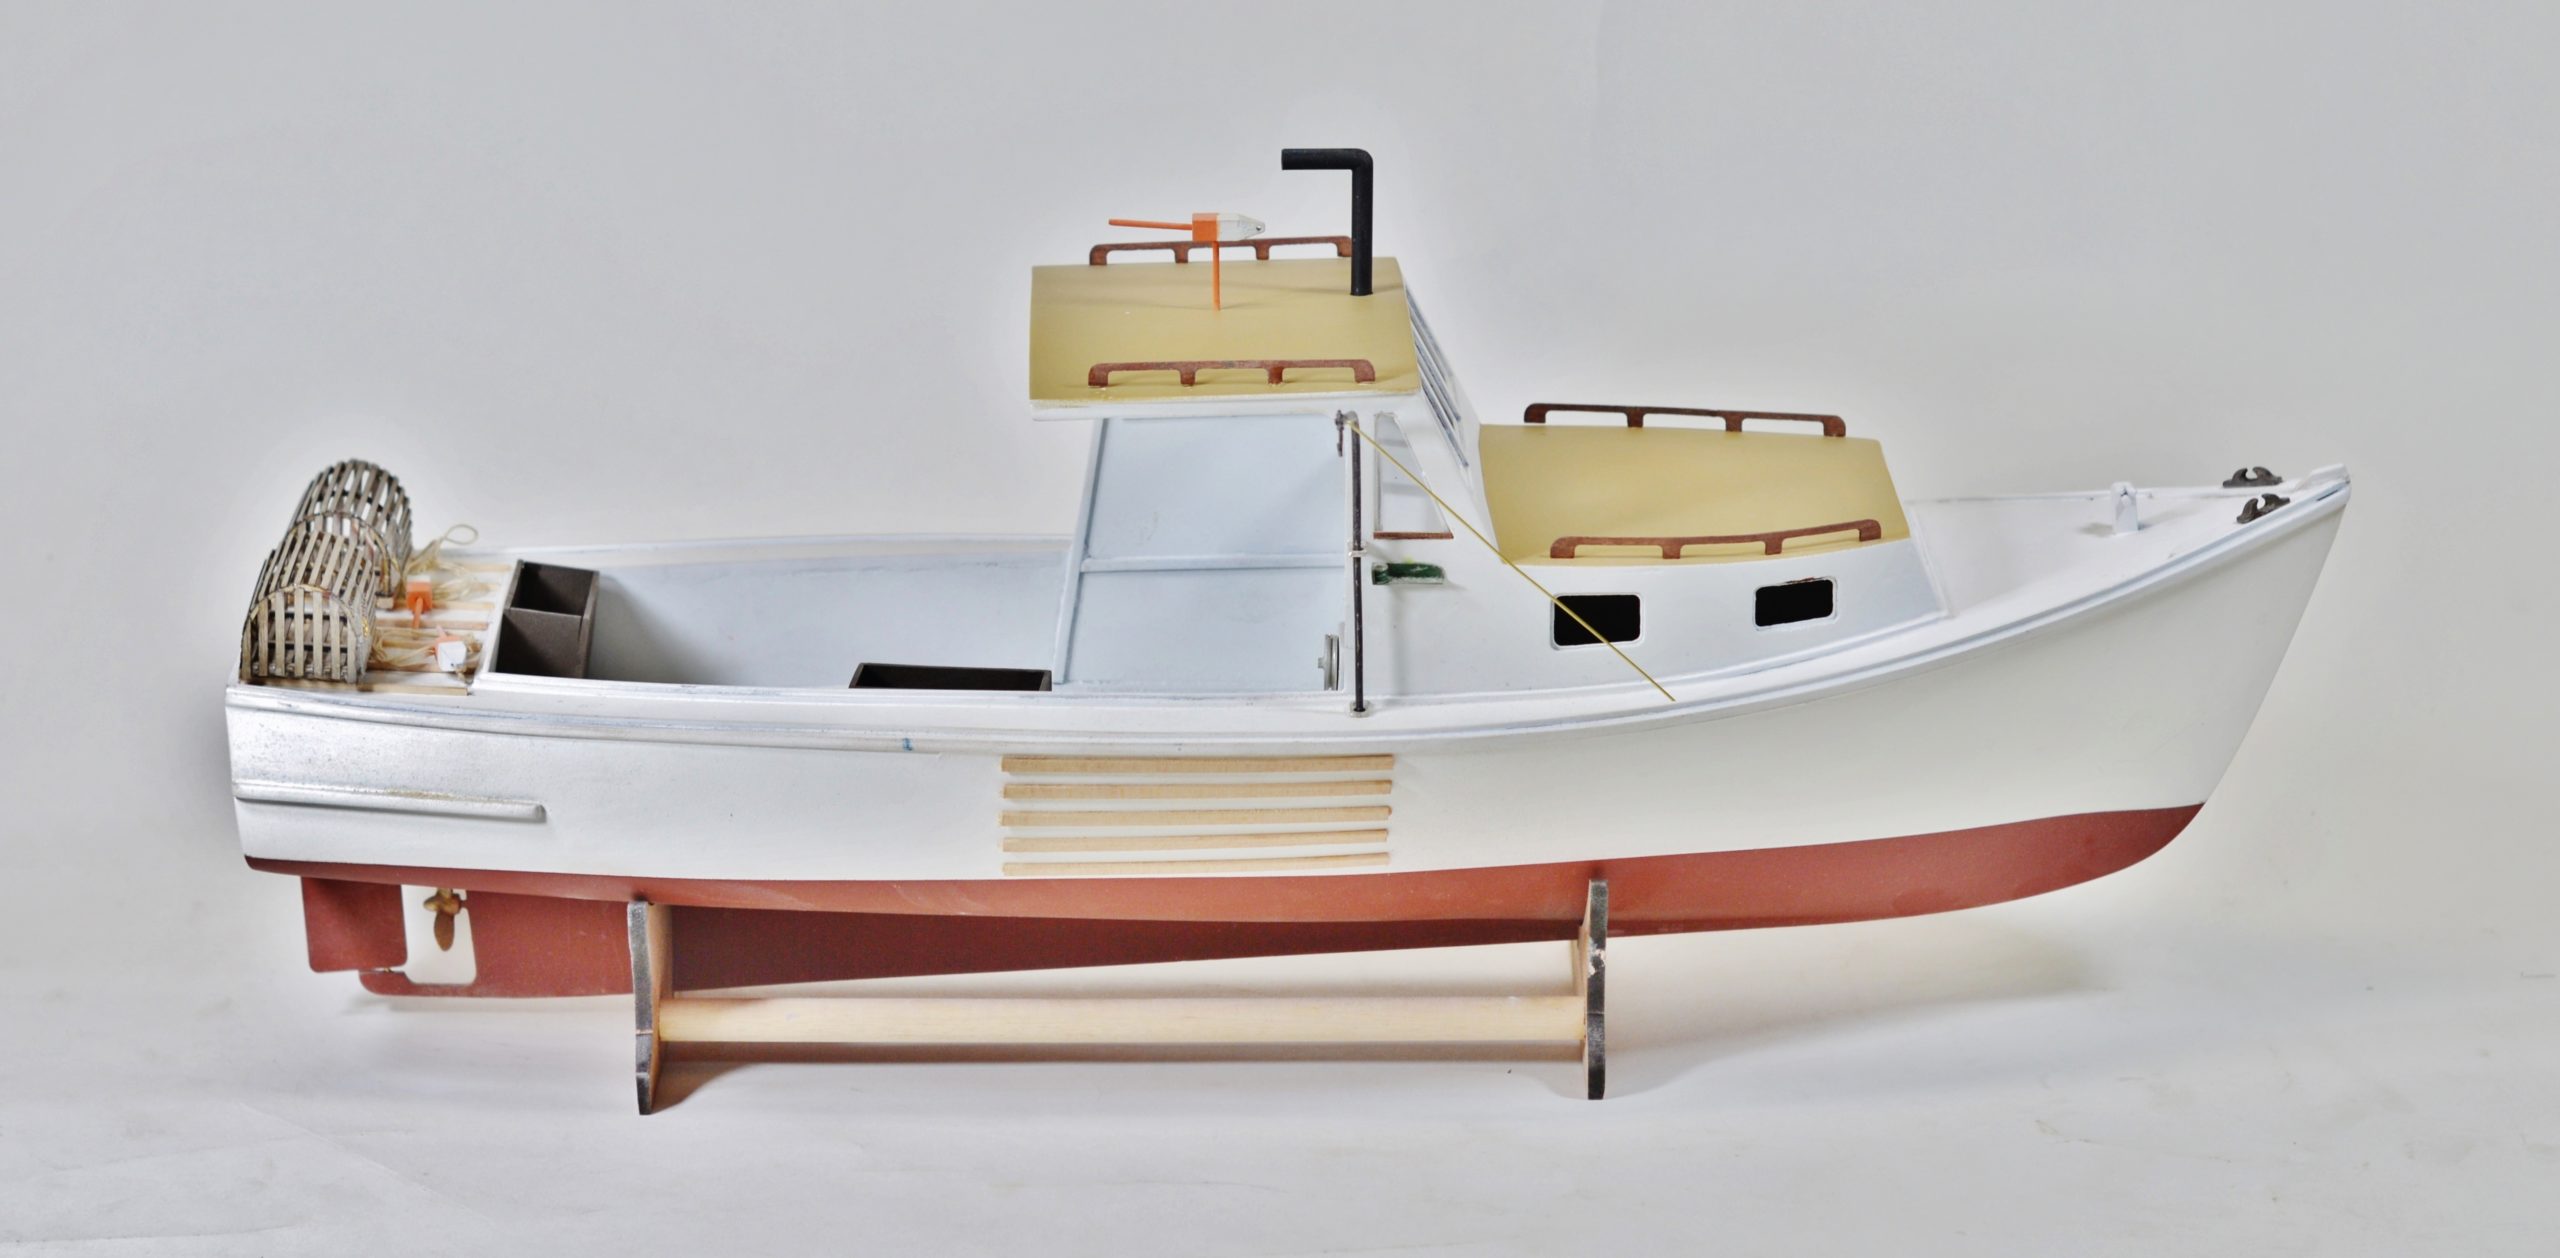 Lobster Boat Model Kit - Lobster Boat Model Ship Kit Bluejacket